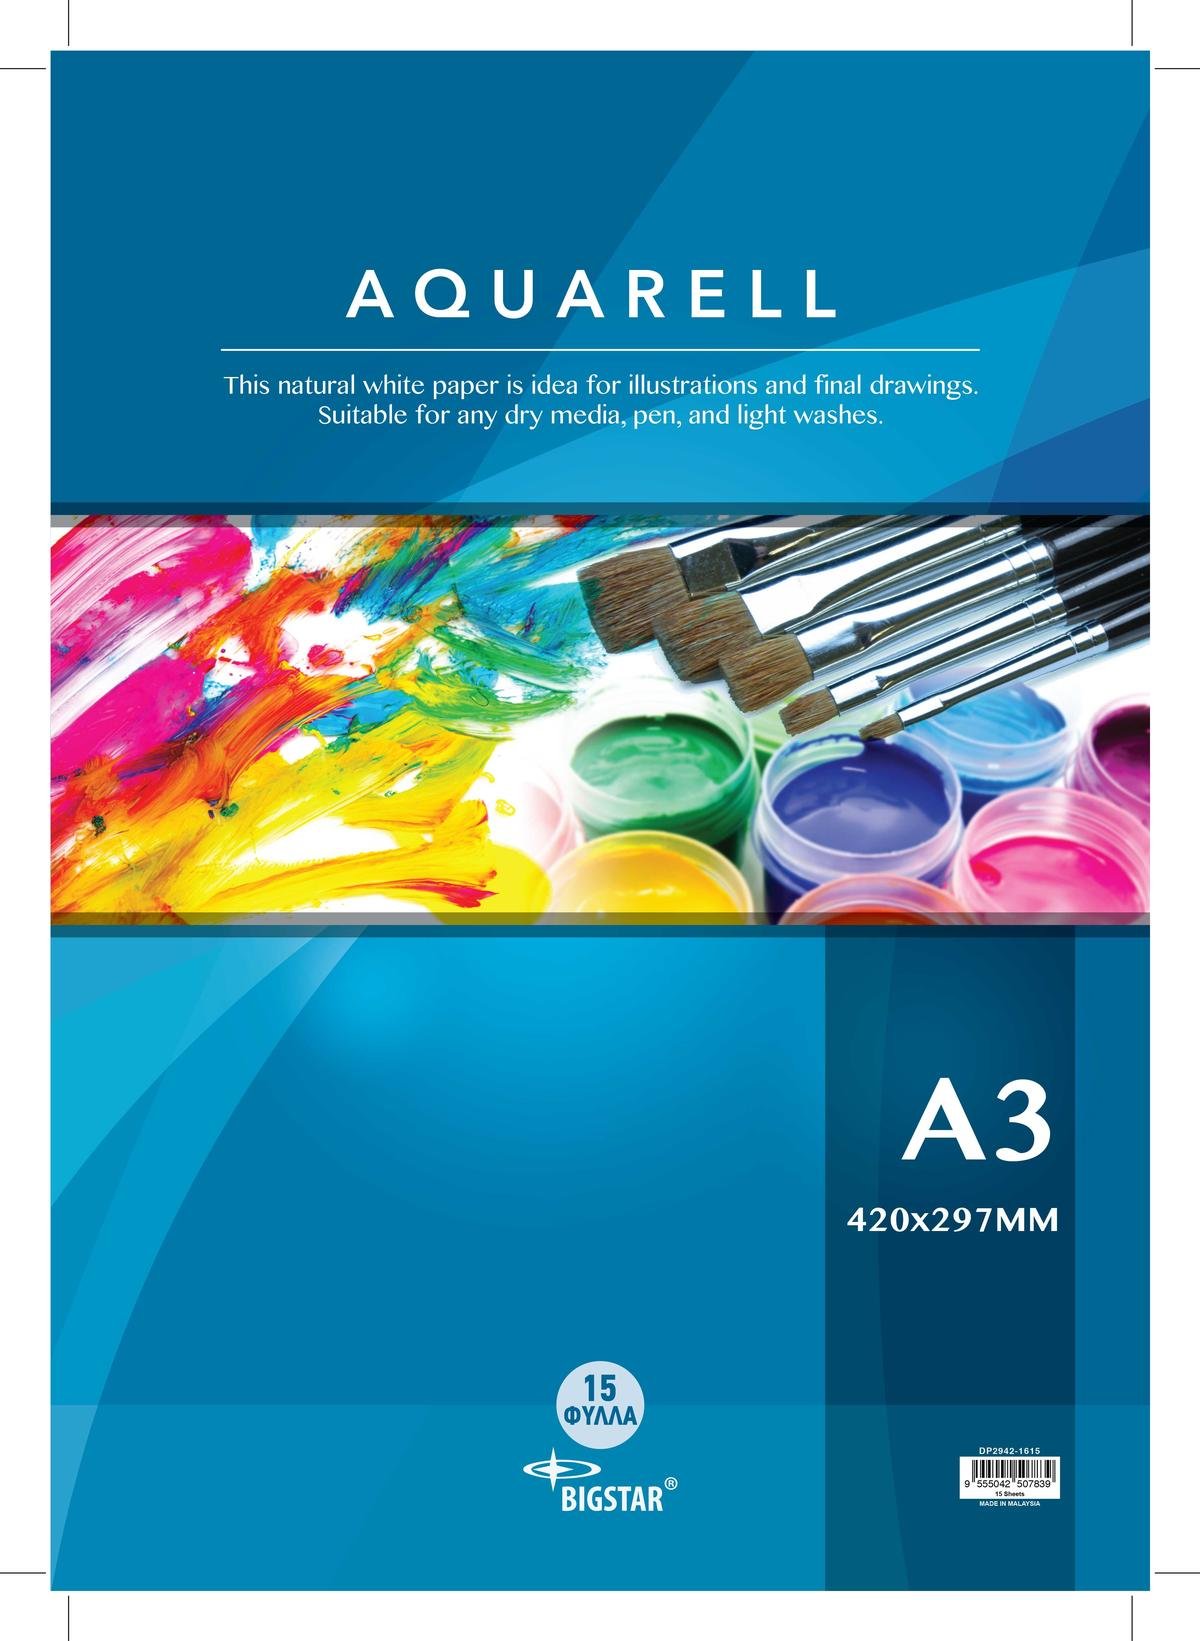 Aquarell basic pad A3 420x297mm 15 sheets